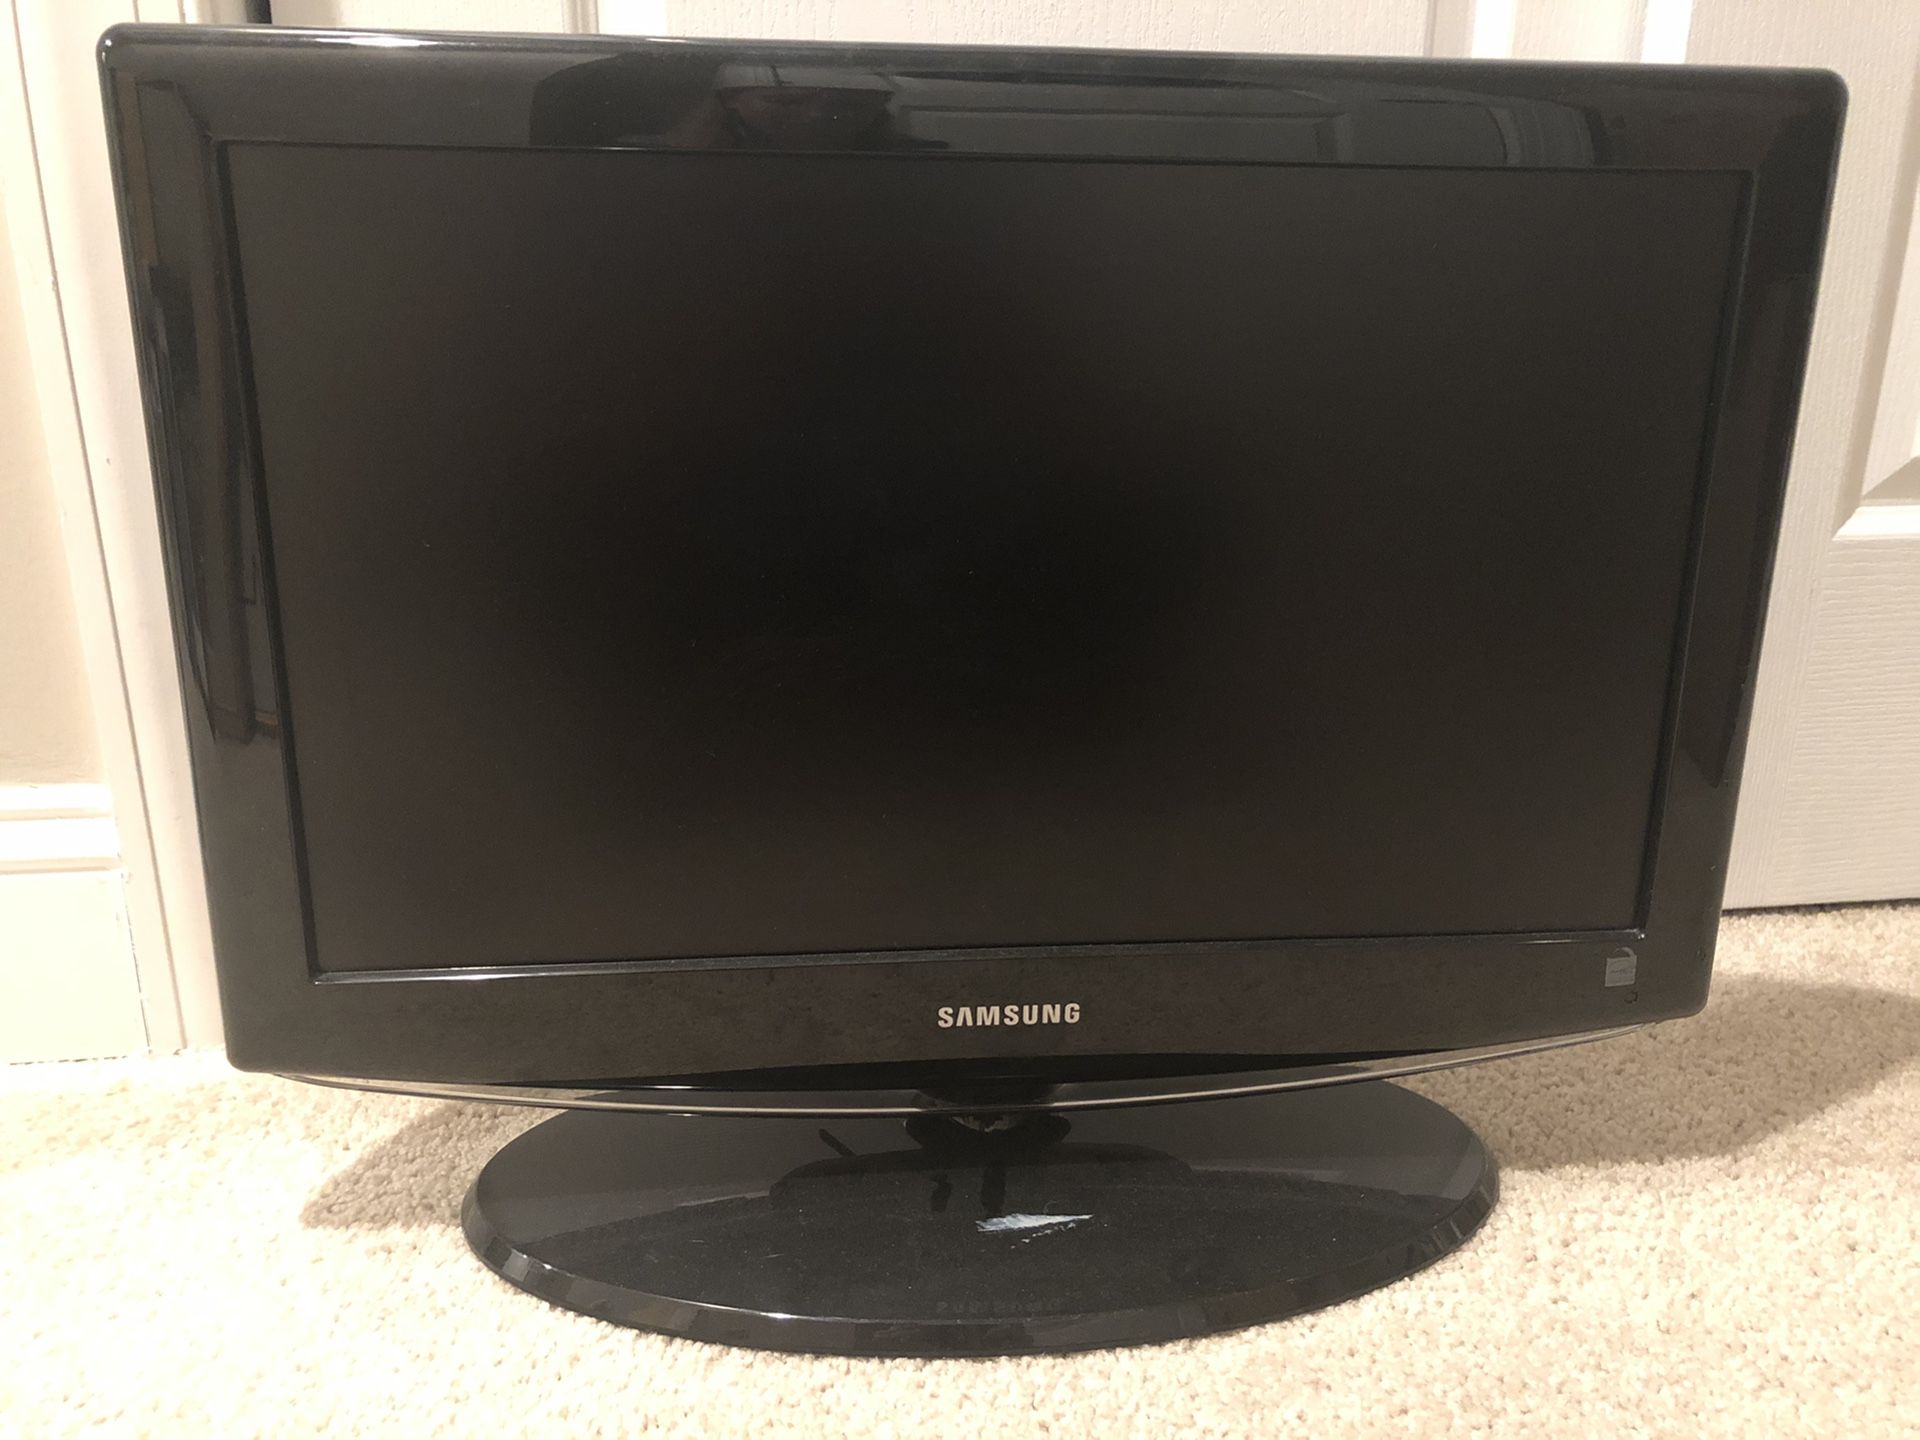 Samsung LN-T2353H 23" LCD TV